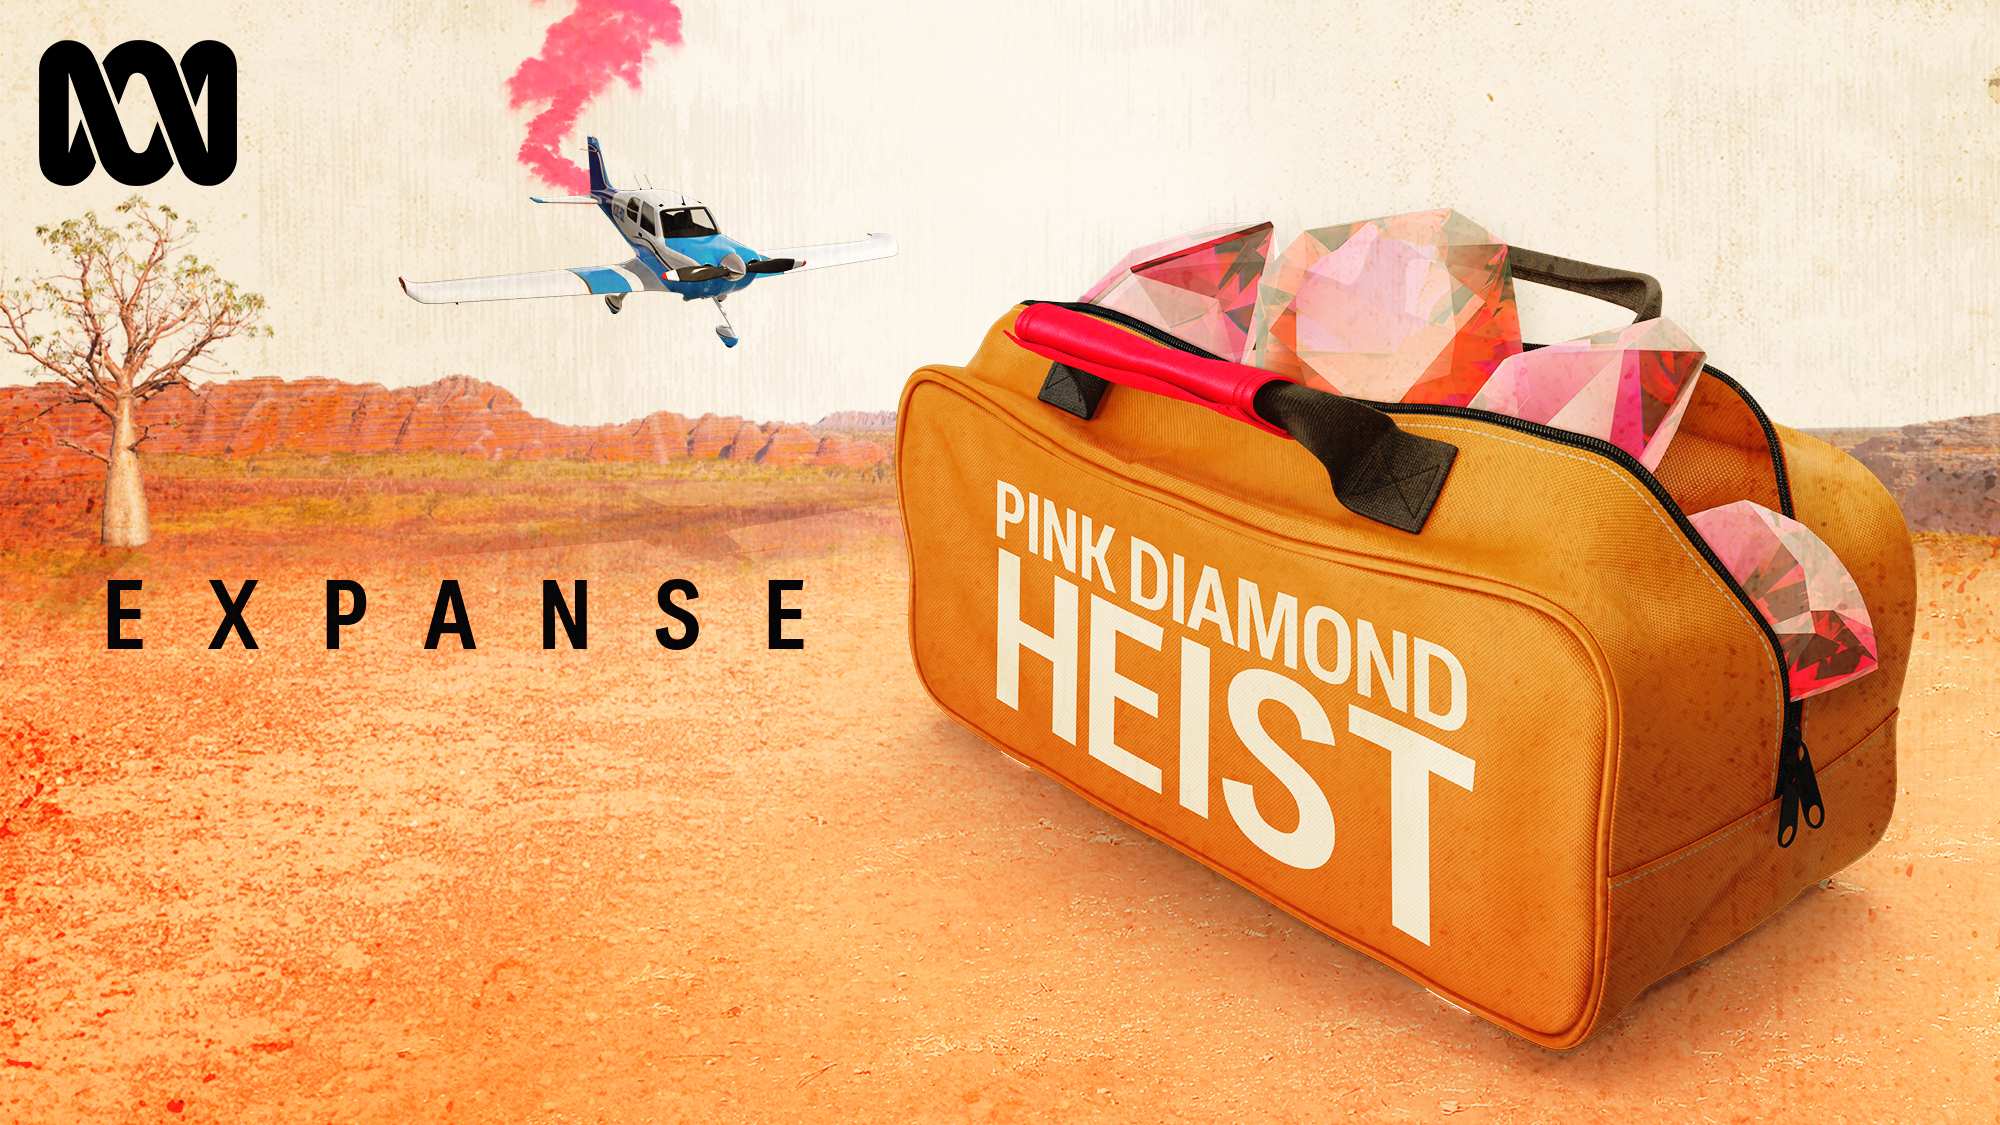 INTRODUCING — Expanse: Pink Diamond Heist